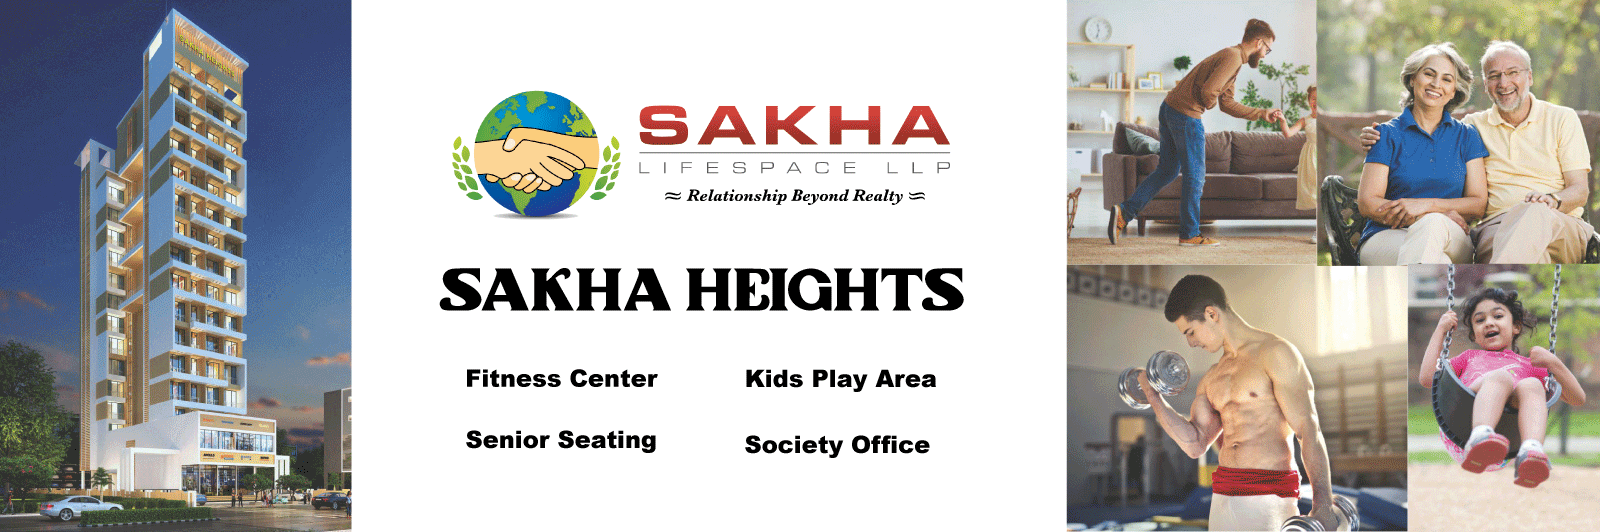 Sakha Heights